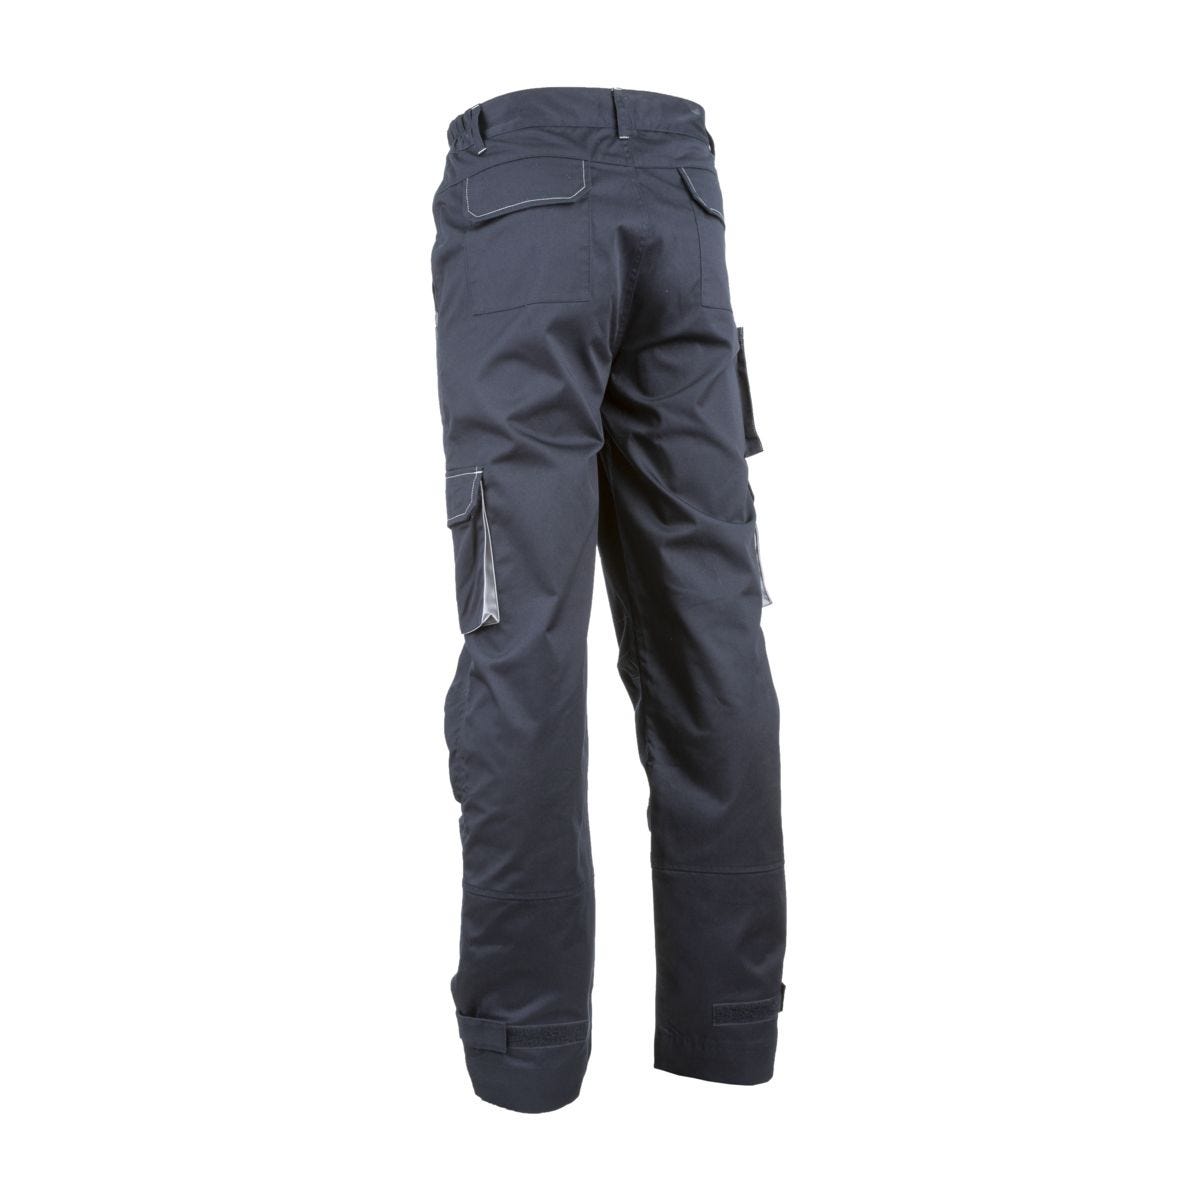 Pantalon NAVY II marine/gris - COVERGUARD - Taille S 1